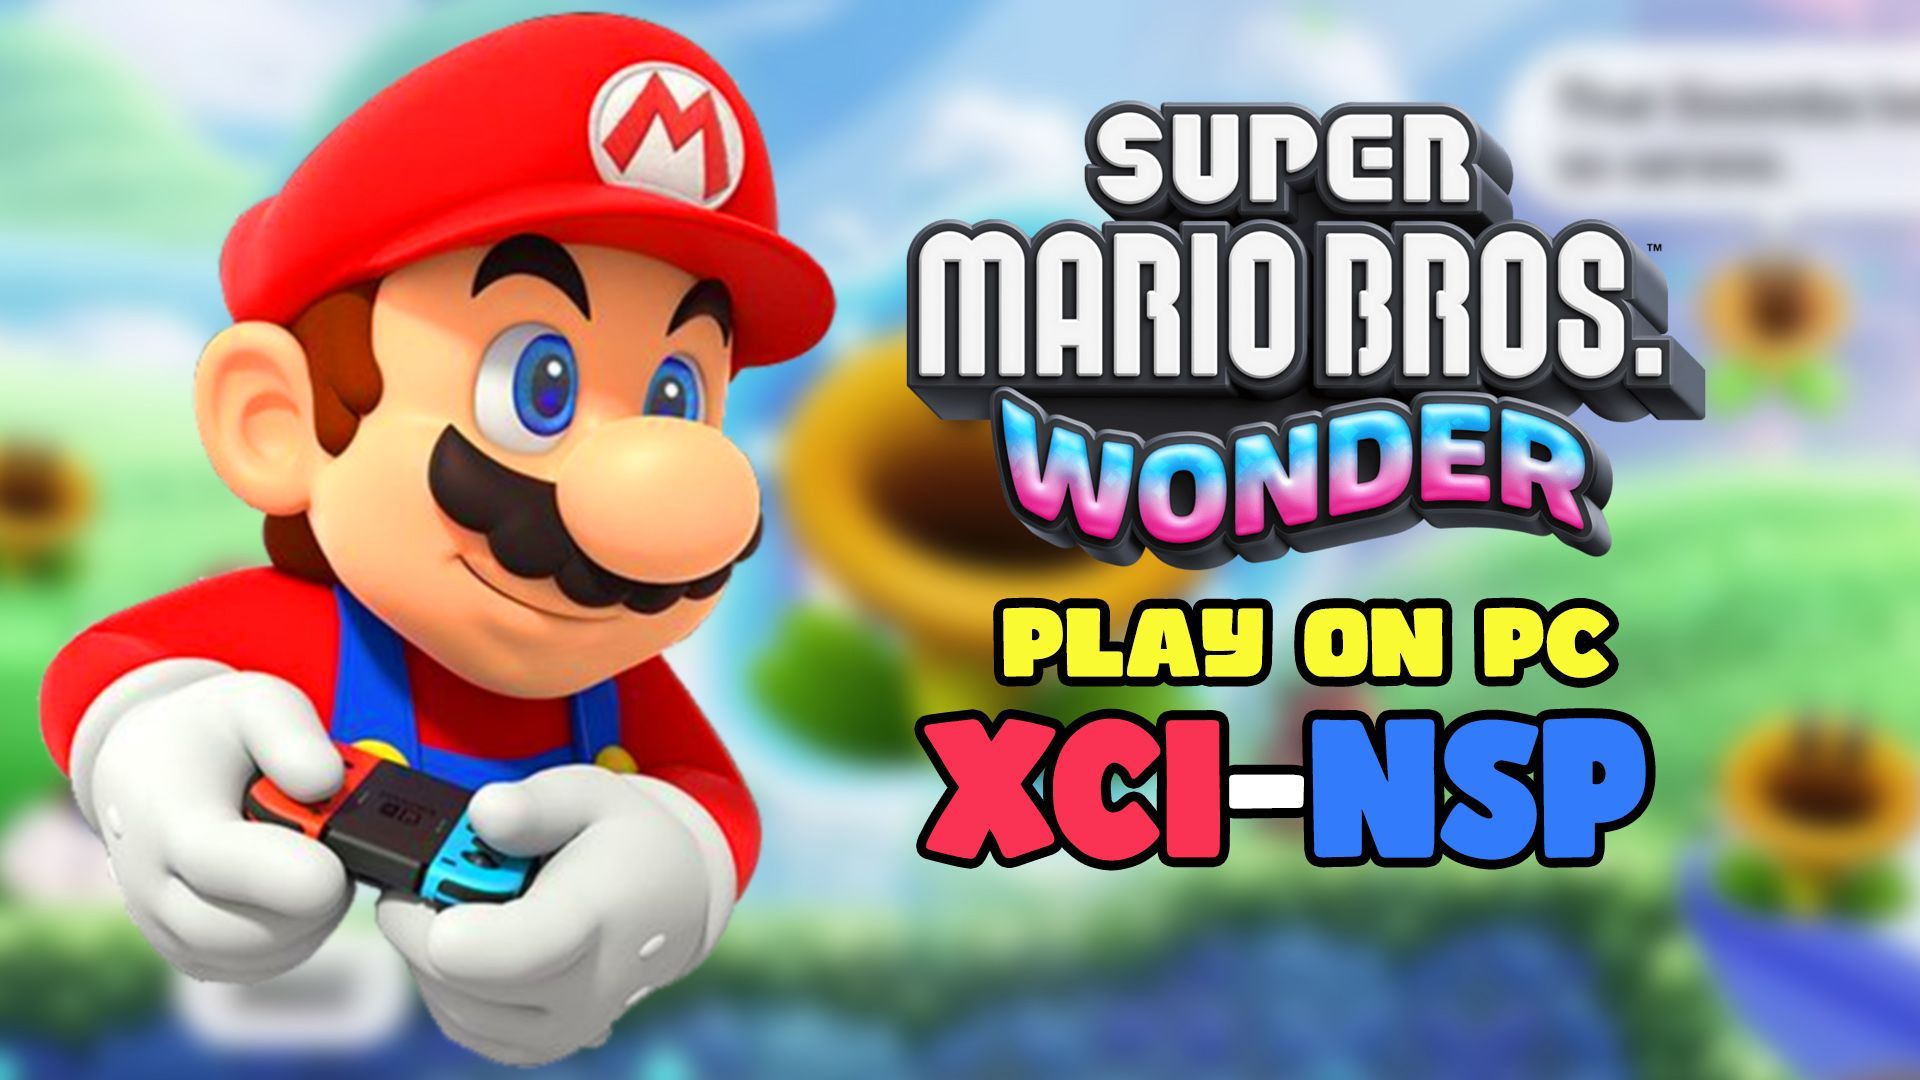 Super Mario 3D World Download Free PC Installer